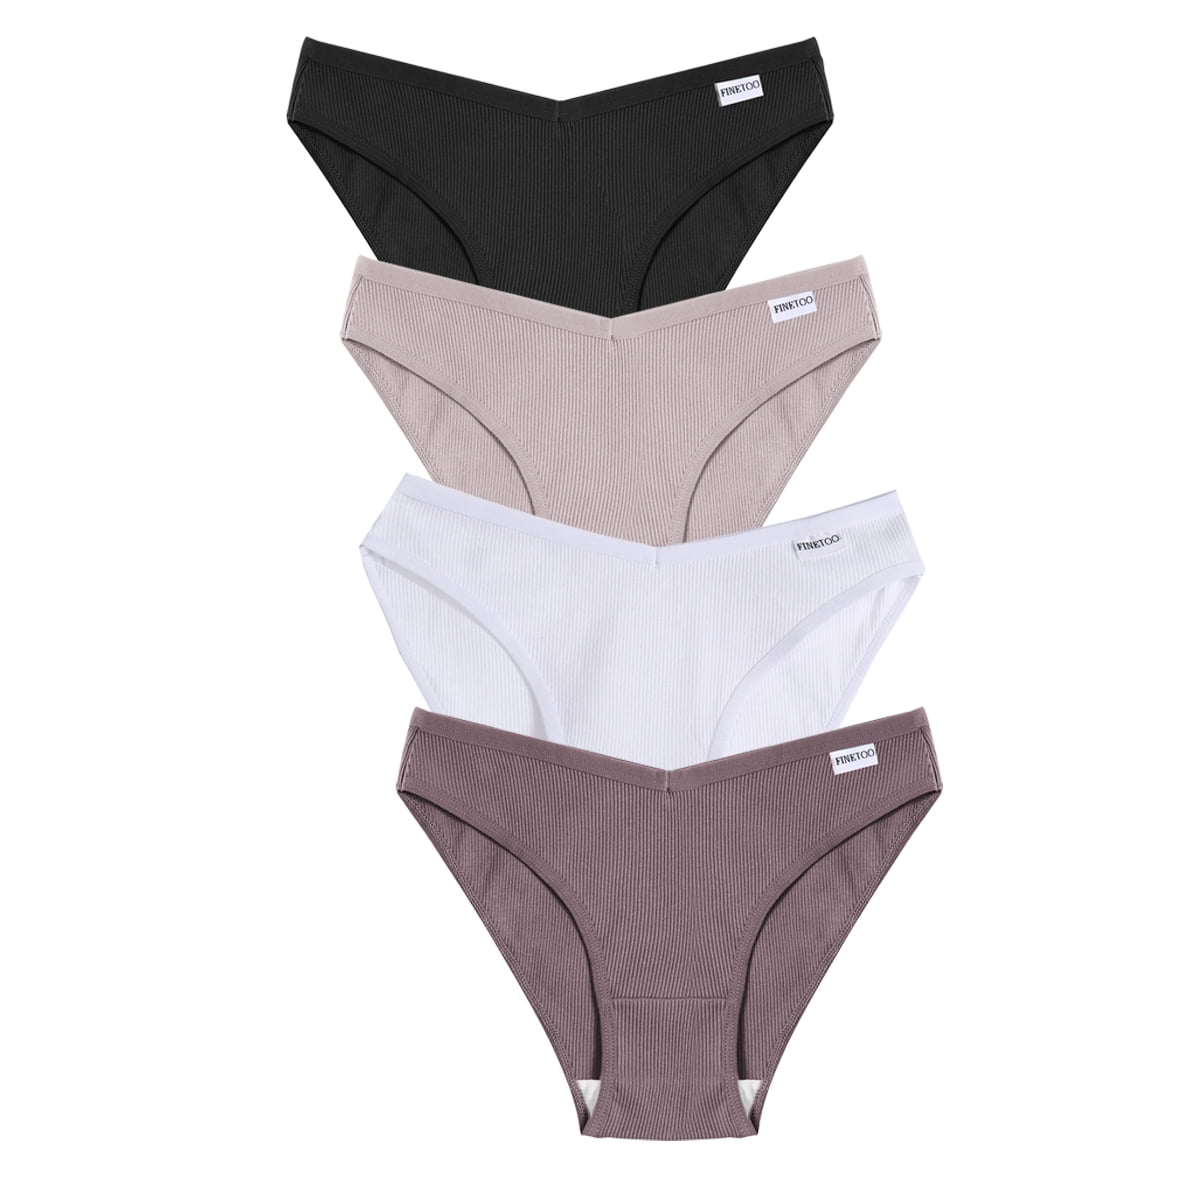 LEVAO Women's Bikini Panties Cotton Underwear Plus Size High Cut String  Ladies Cheeky Underwear 6 pack S-2XL